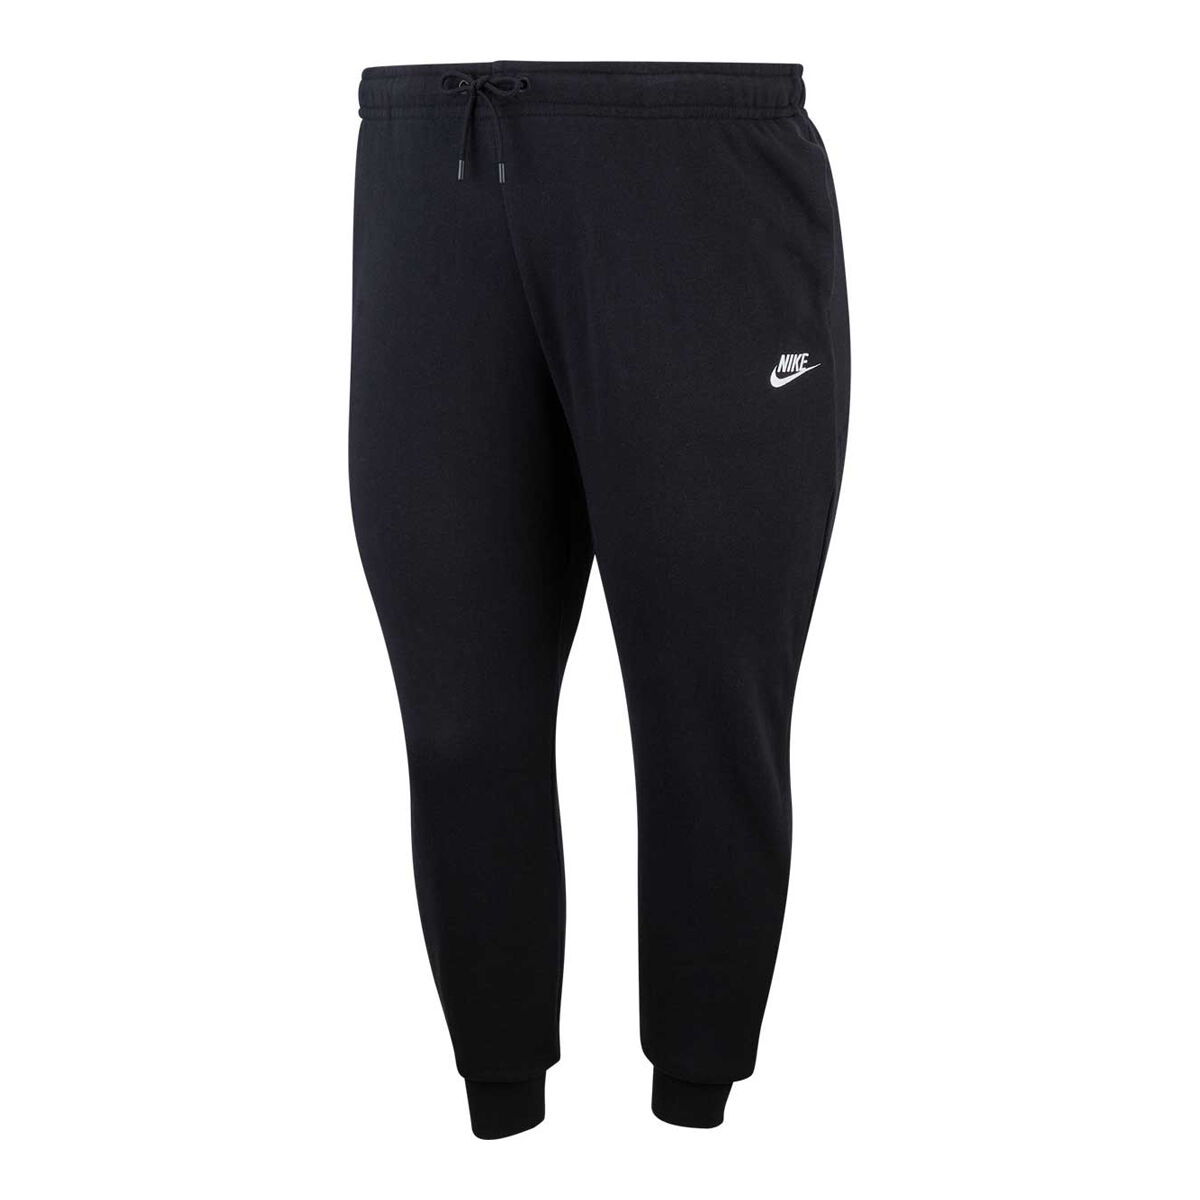 Buy Nike Sportswear Trend Plus Size Training Pants Women, Black/White, 1X  at